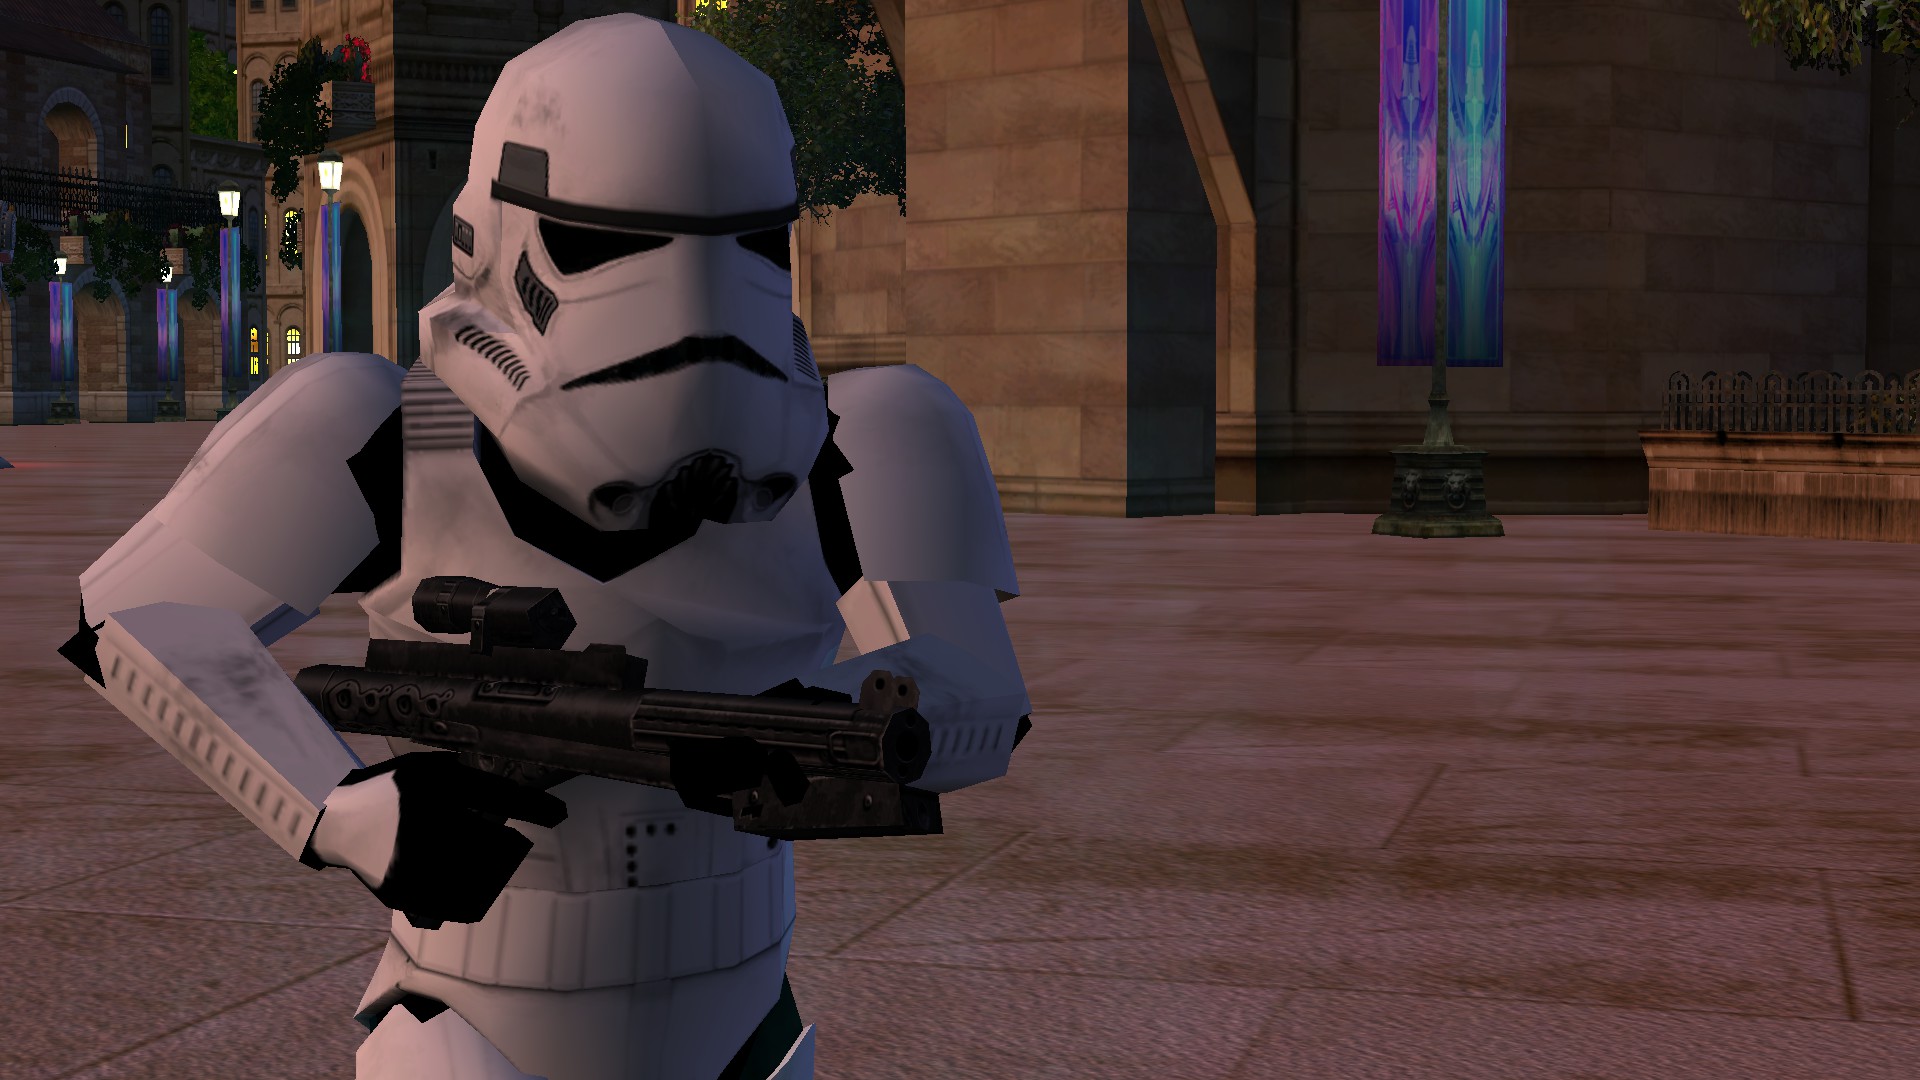 Return of the Jedi Imperial Stormtrooper image Era Mod for Star Wars Battlefront II